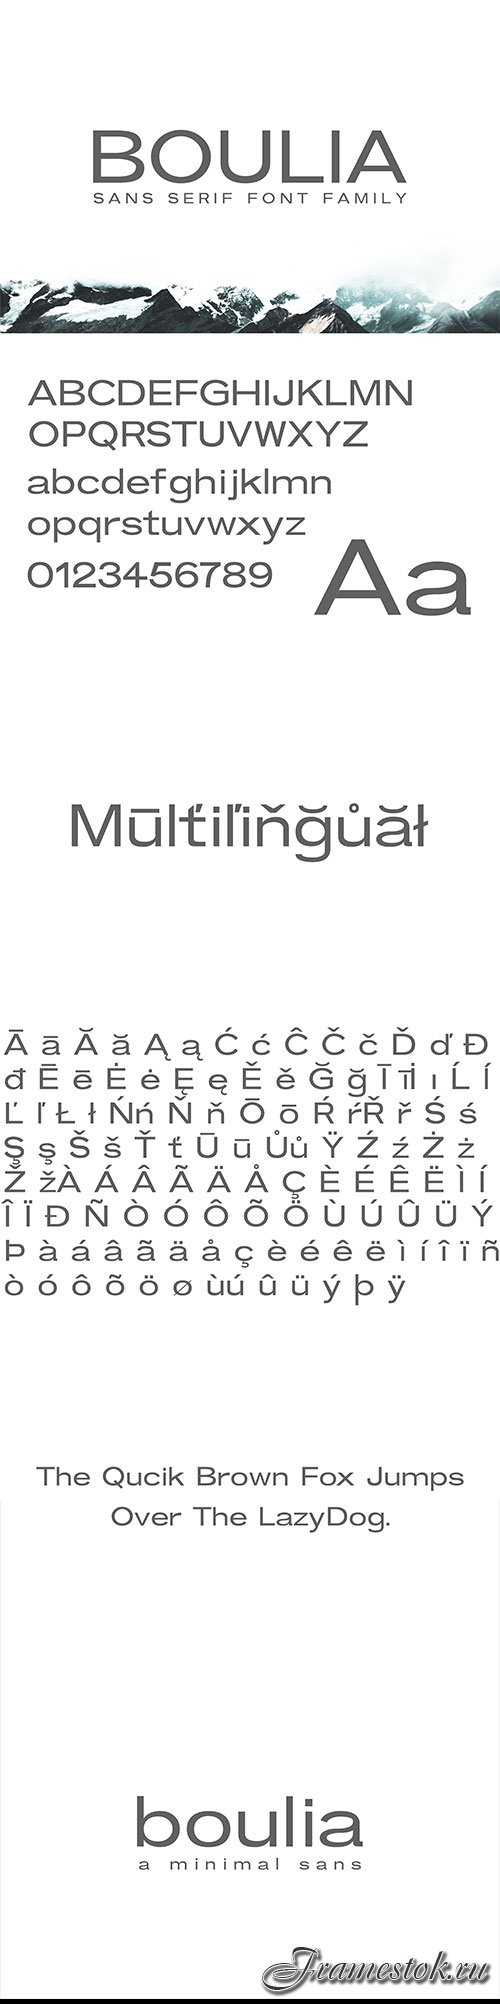 CM - Boulia Sans Serif Font Family 2912151